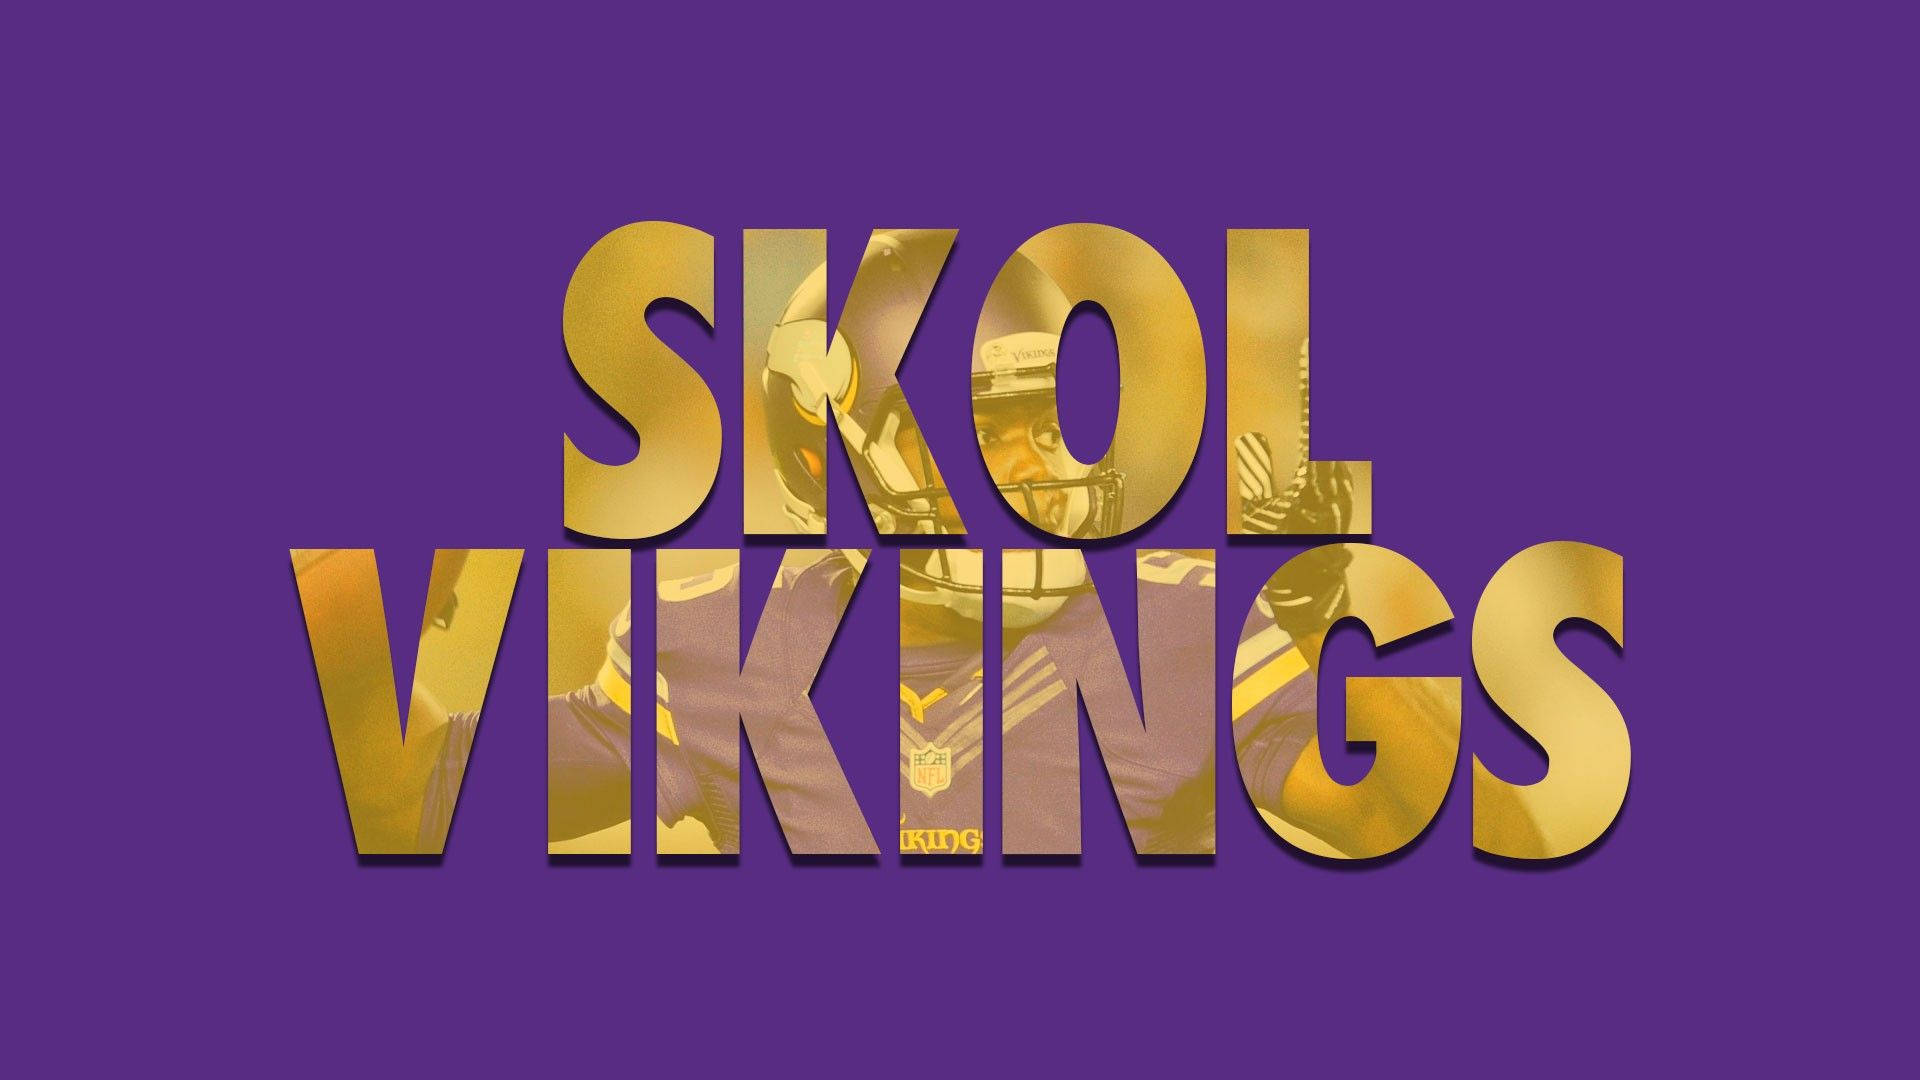 Minnesota Vikings Skol 2019 Background